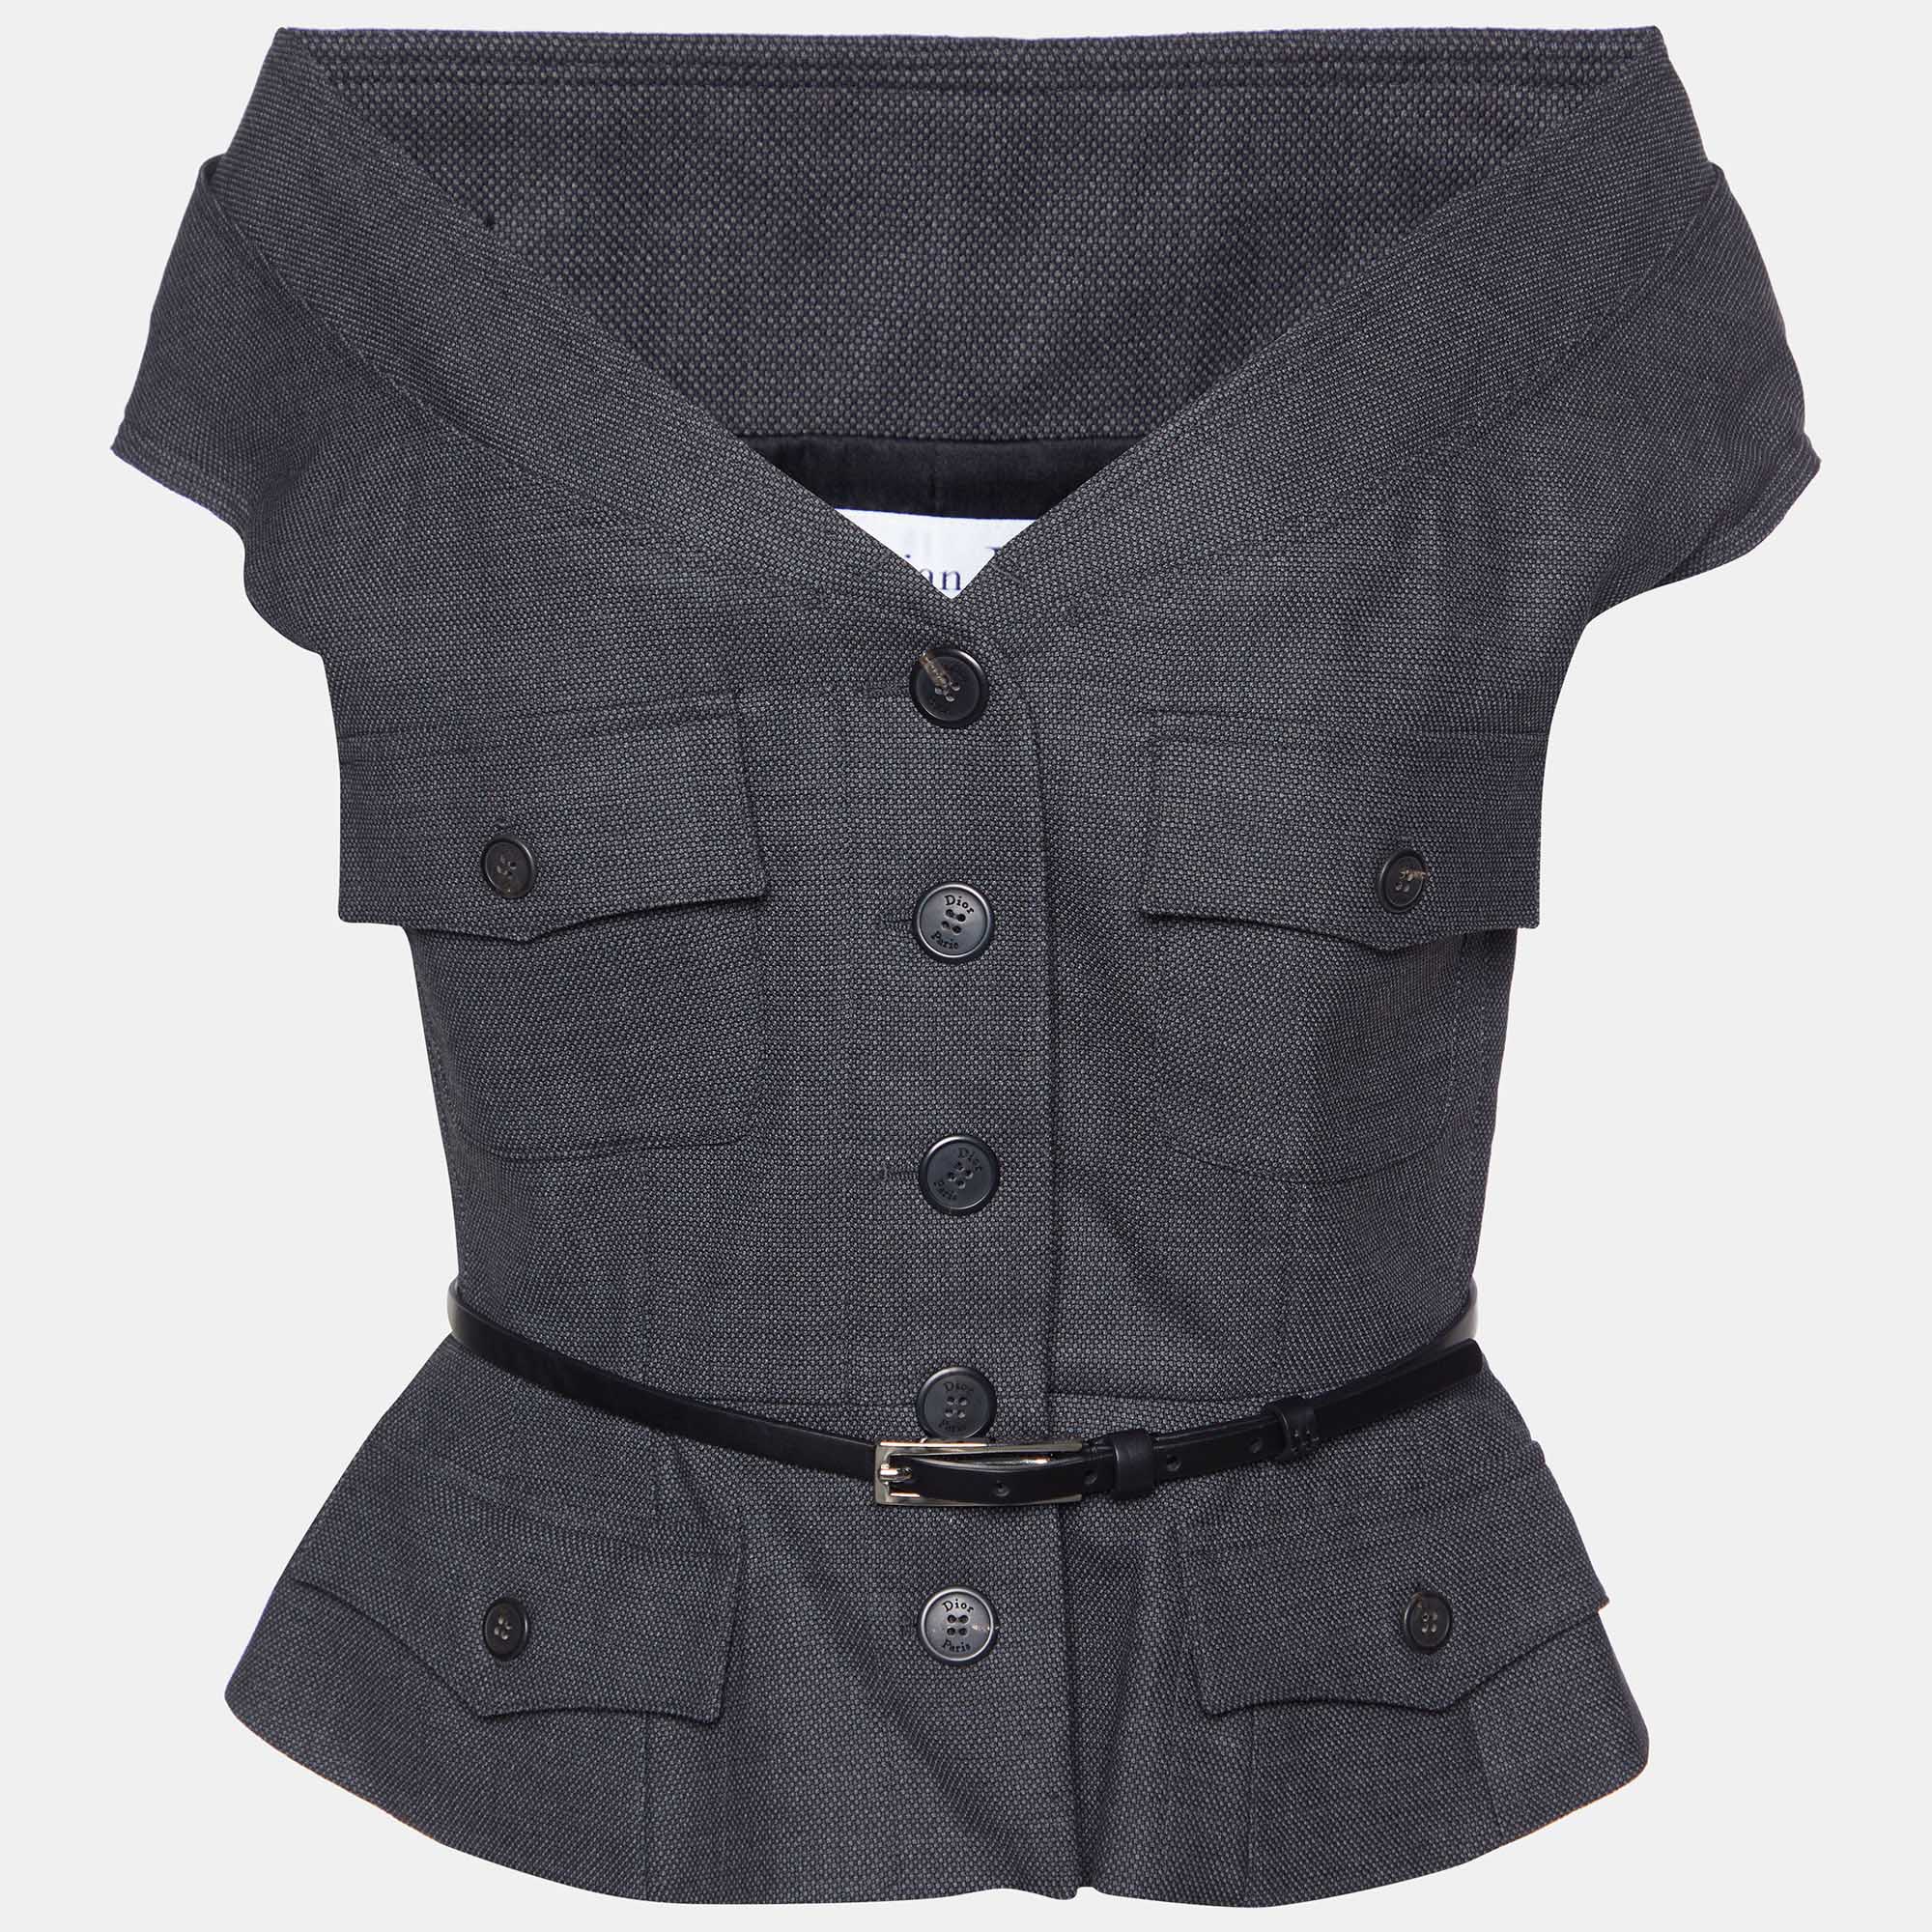 Dior dark grey wool belted skirt suit l